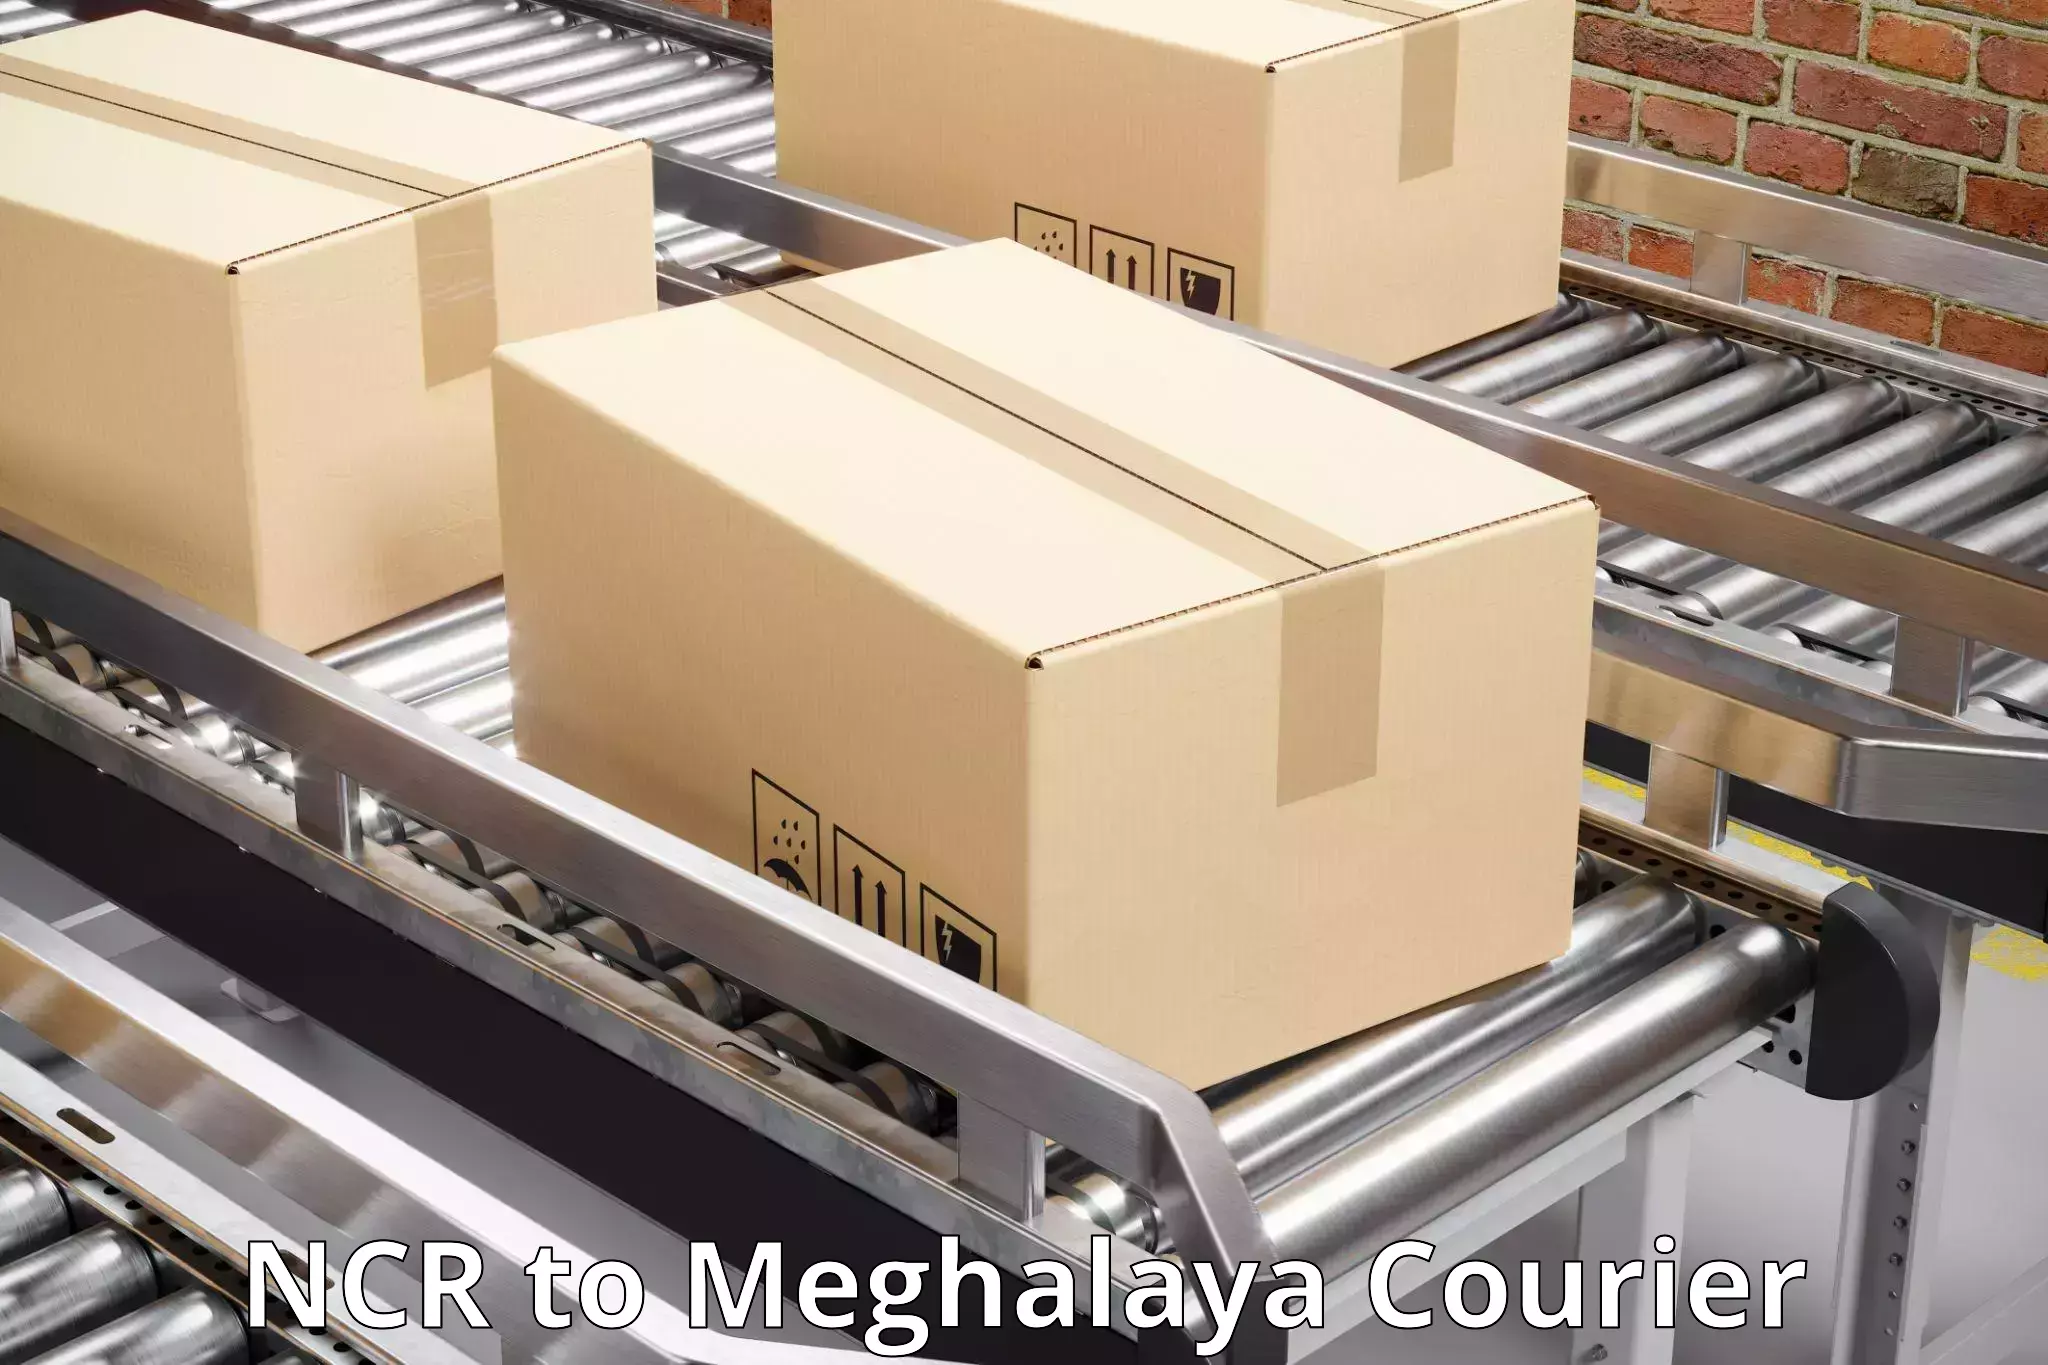 Affordable parcel service NCR to Meghalaya